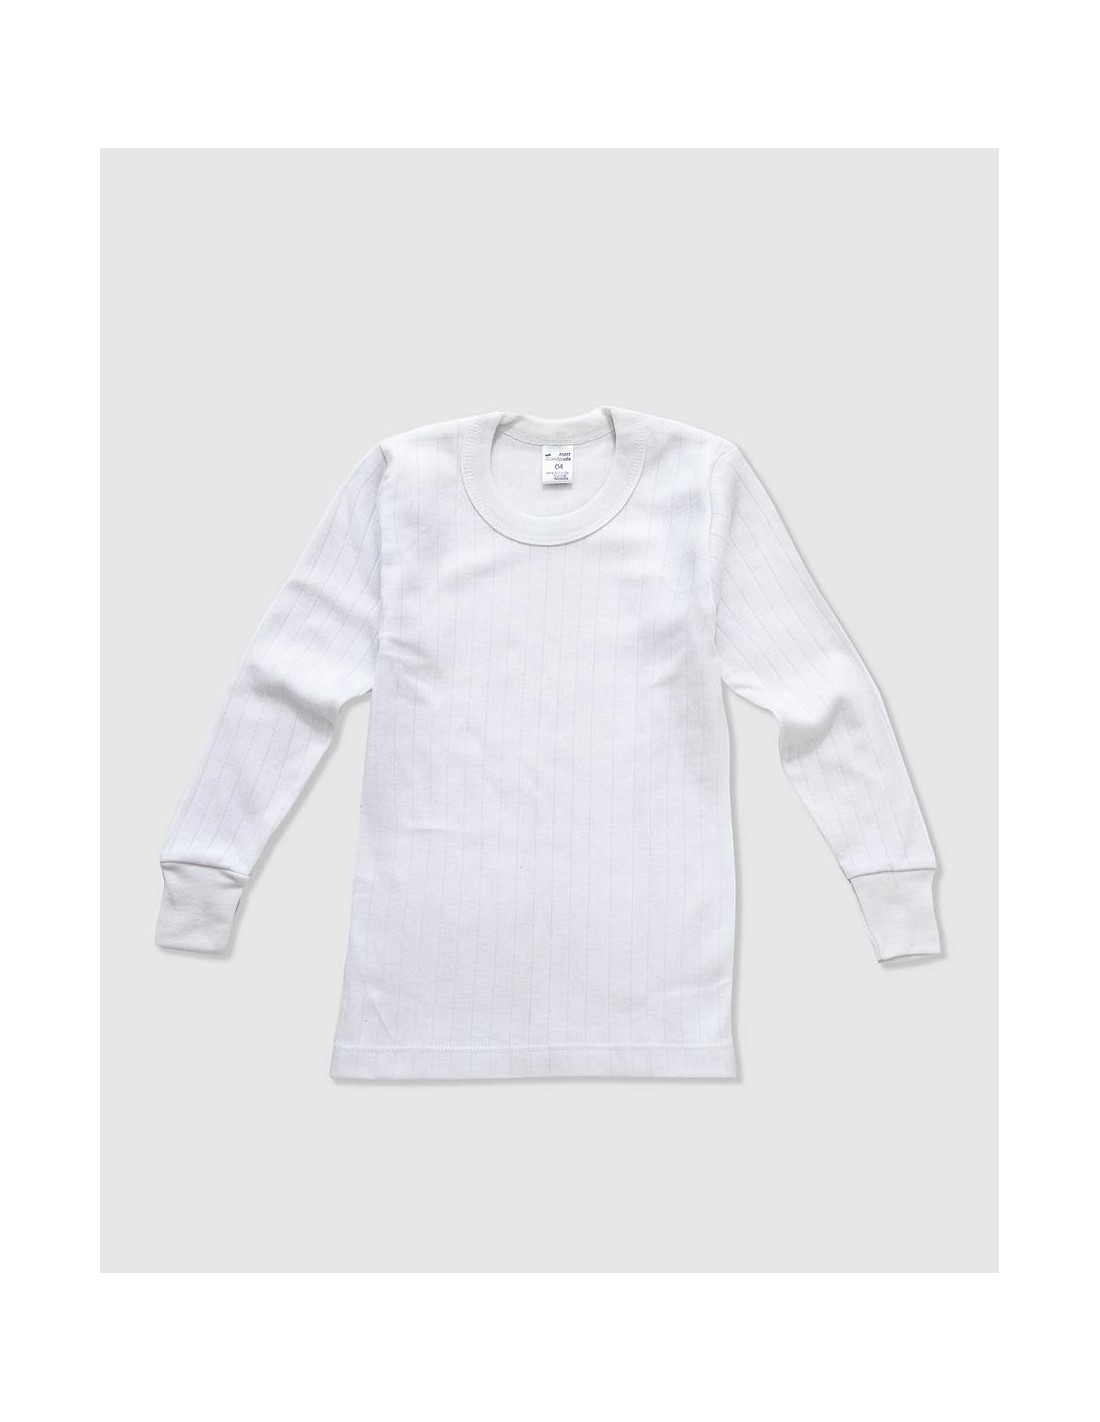 Camiseta interior térmica Abanderado 100% Algodón manga larga (blanca)